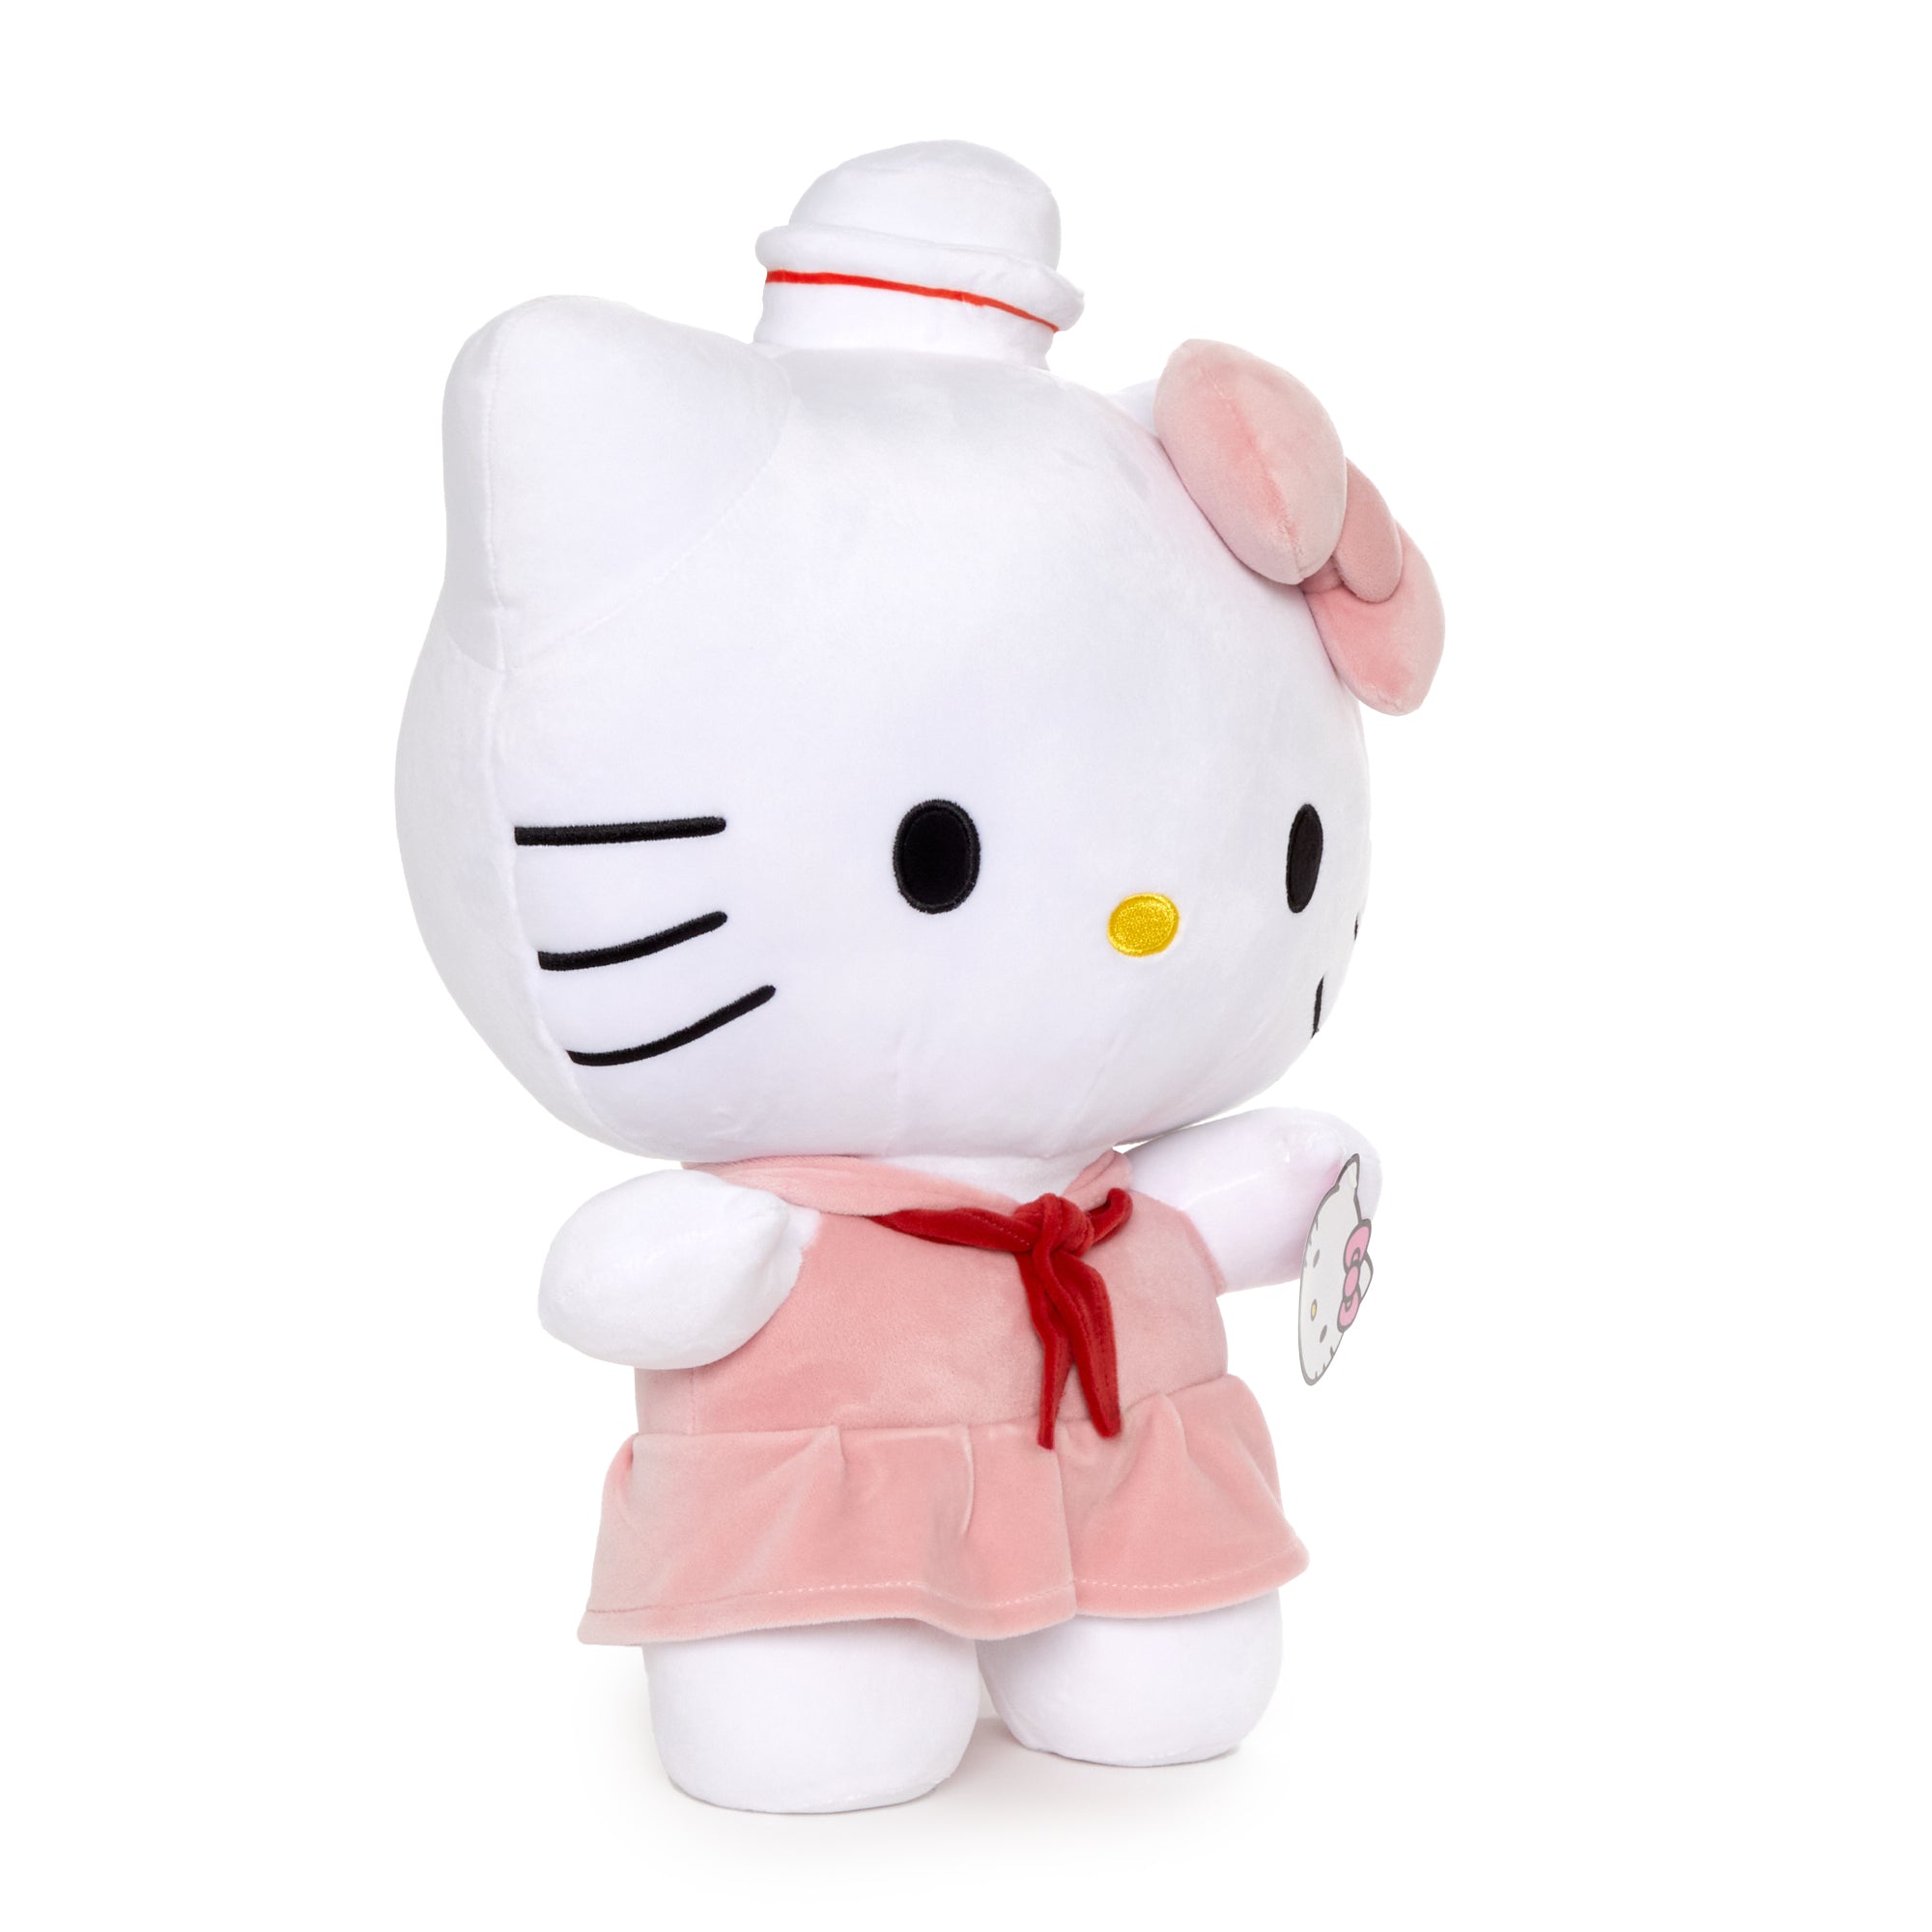 Sanrio Hello Kitty Plush Doll Red Overall Jumbo Big 16.9 43cm New